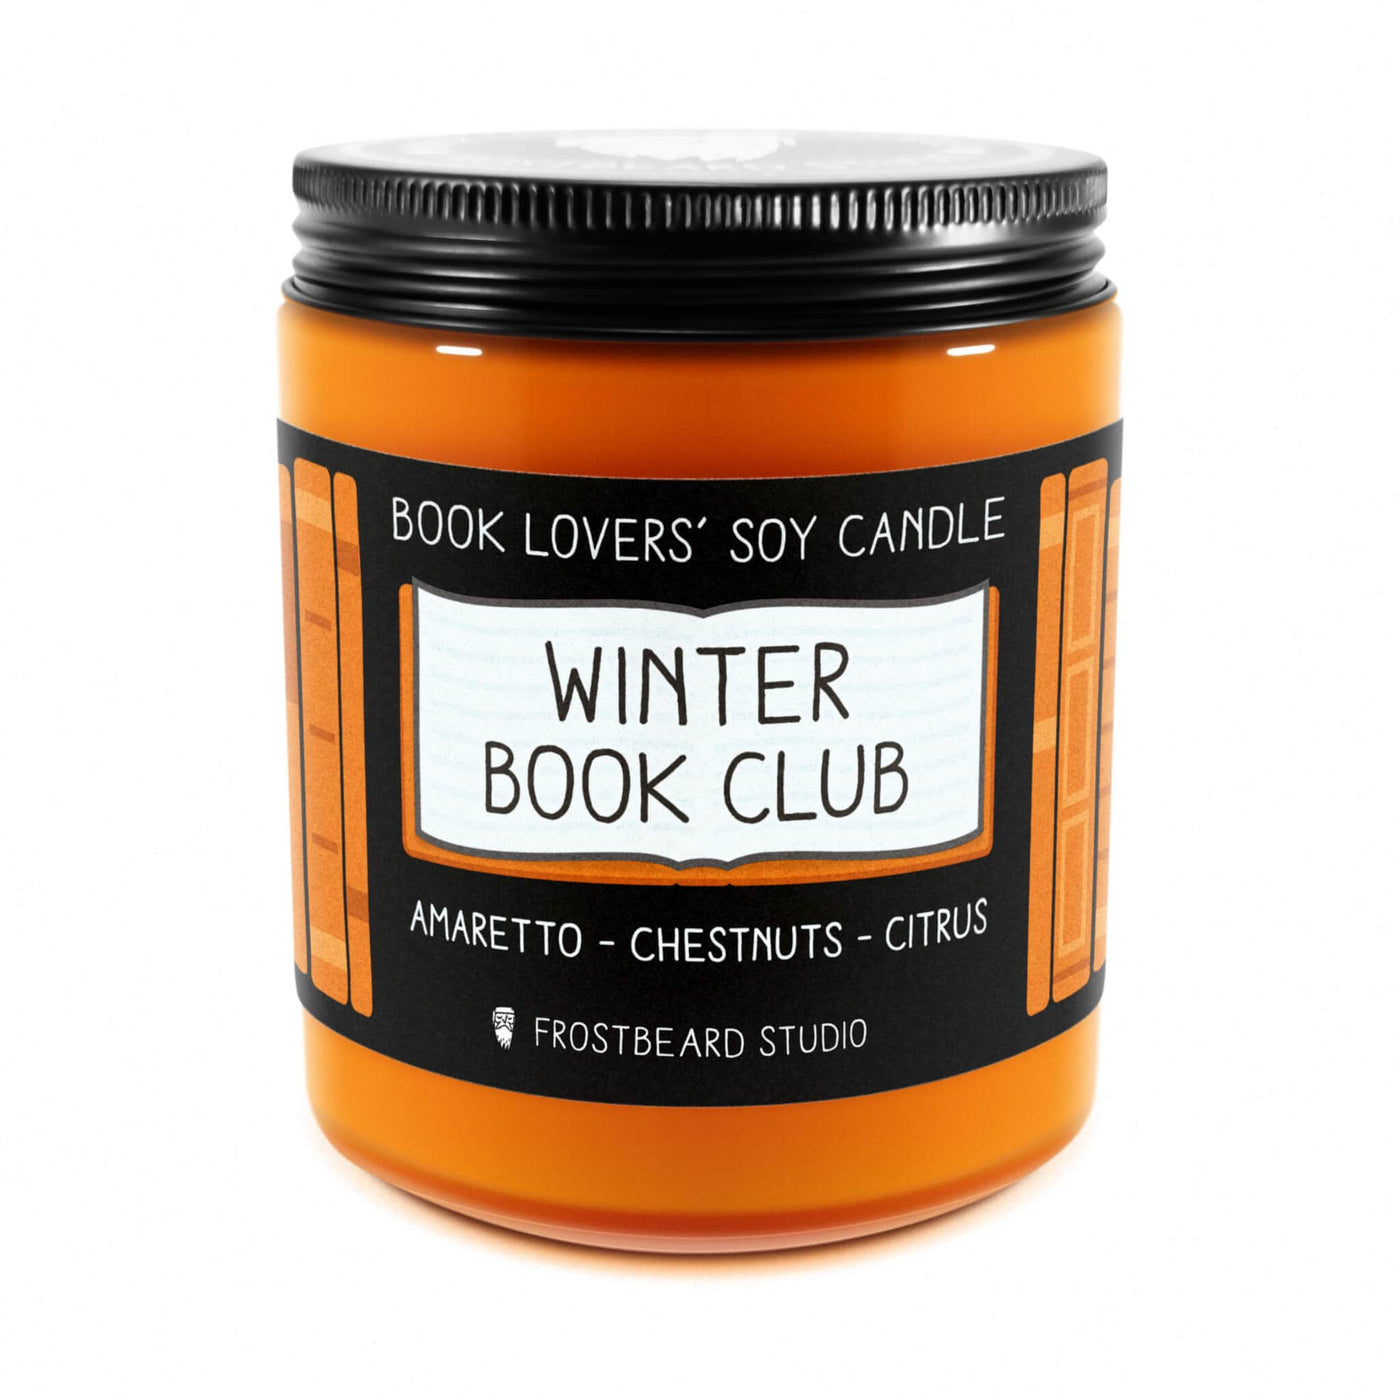 Winter Book Club - 8 oz Jar - Book Lovers' Soy Candle - Frostbeard Studio